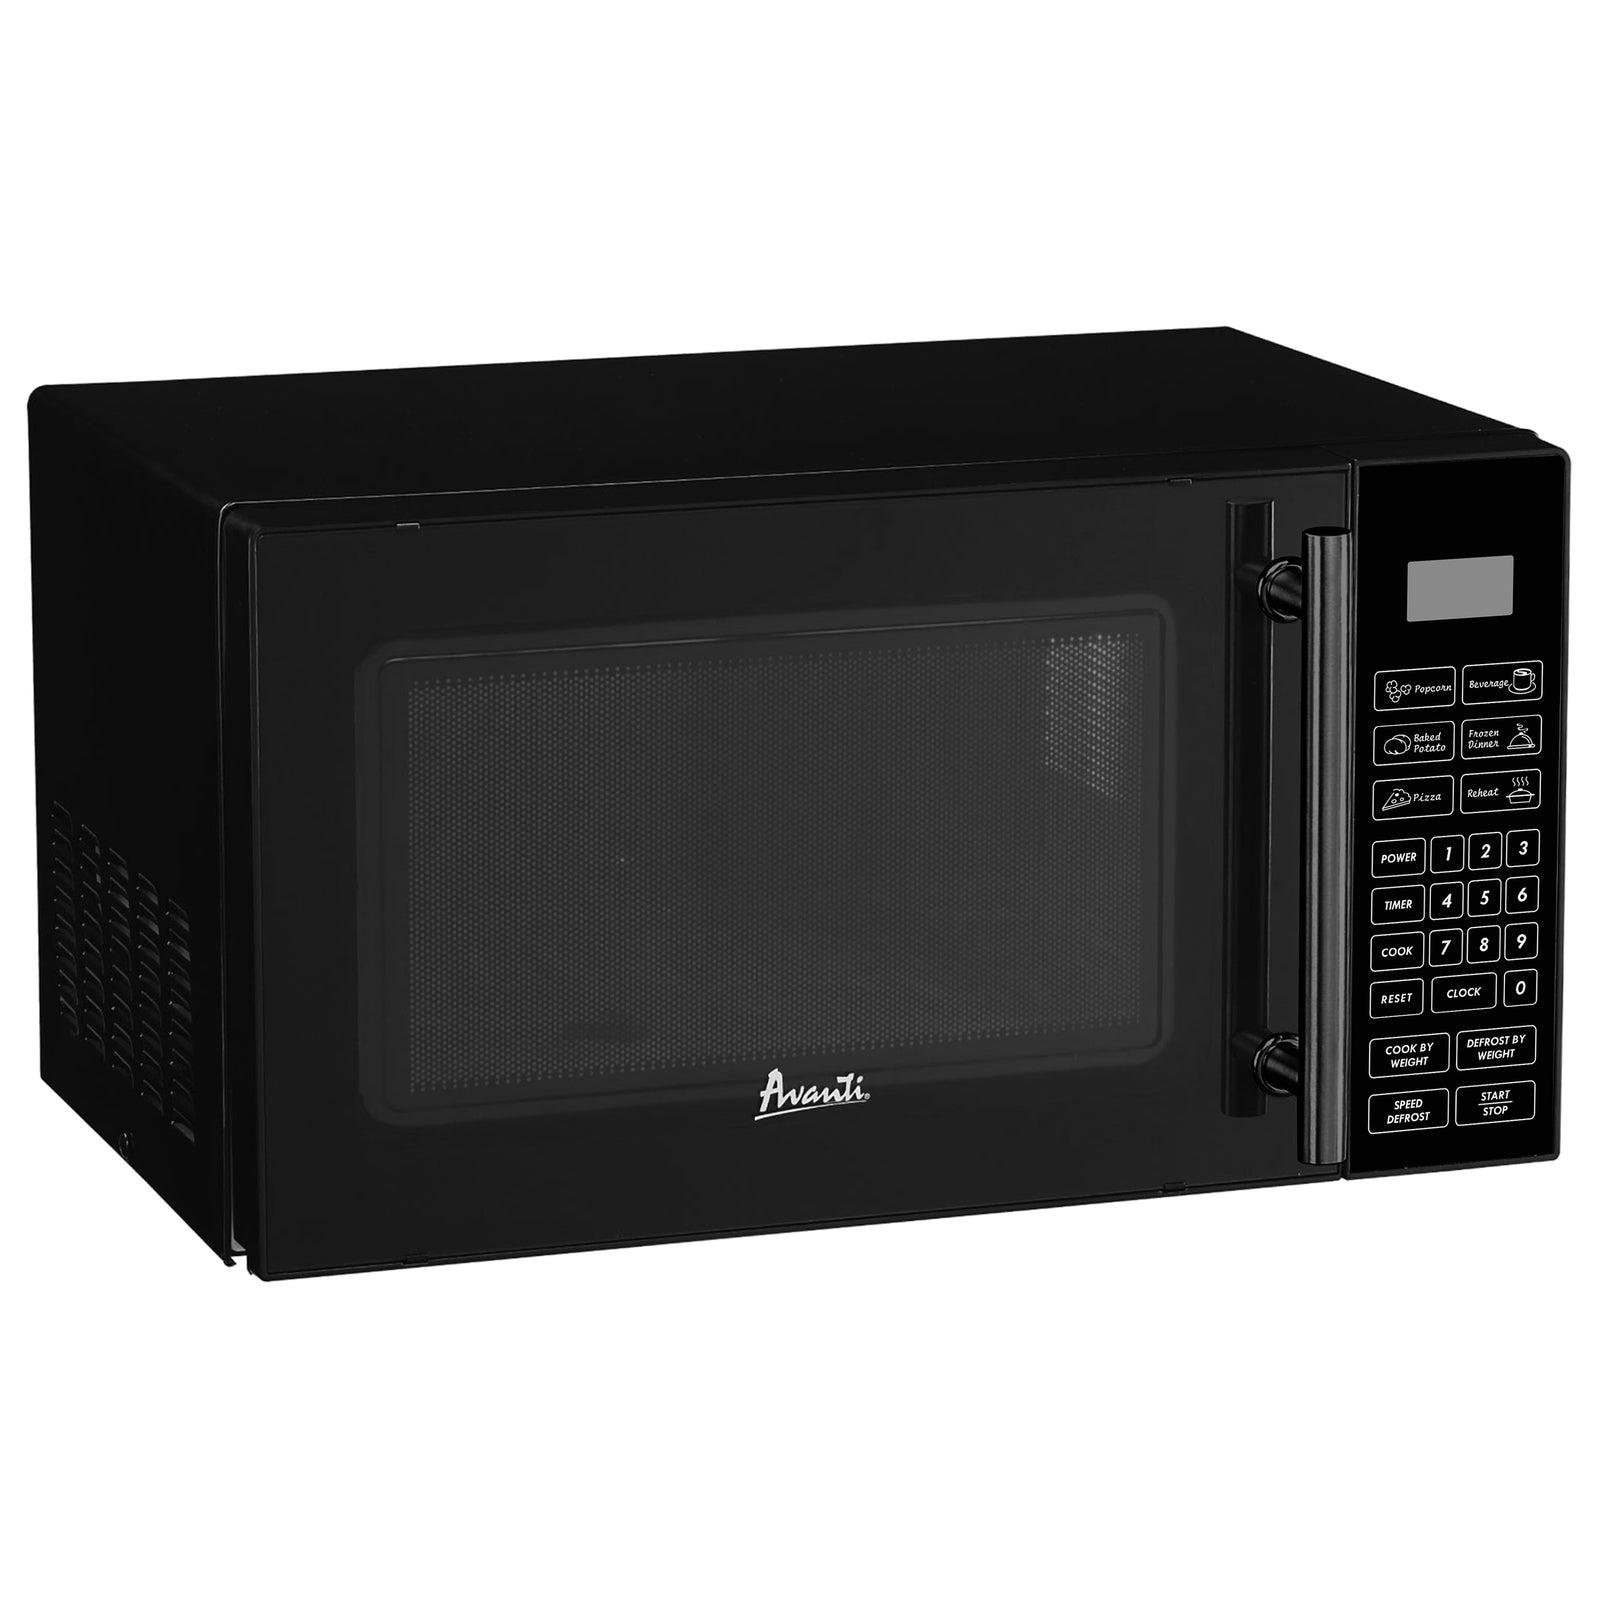 Avanti MT81K1BH 0.8 Cu. Ft. Countertop Microwave Oven